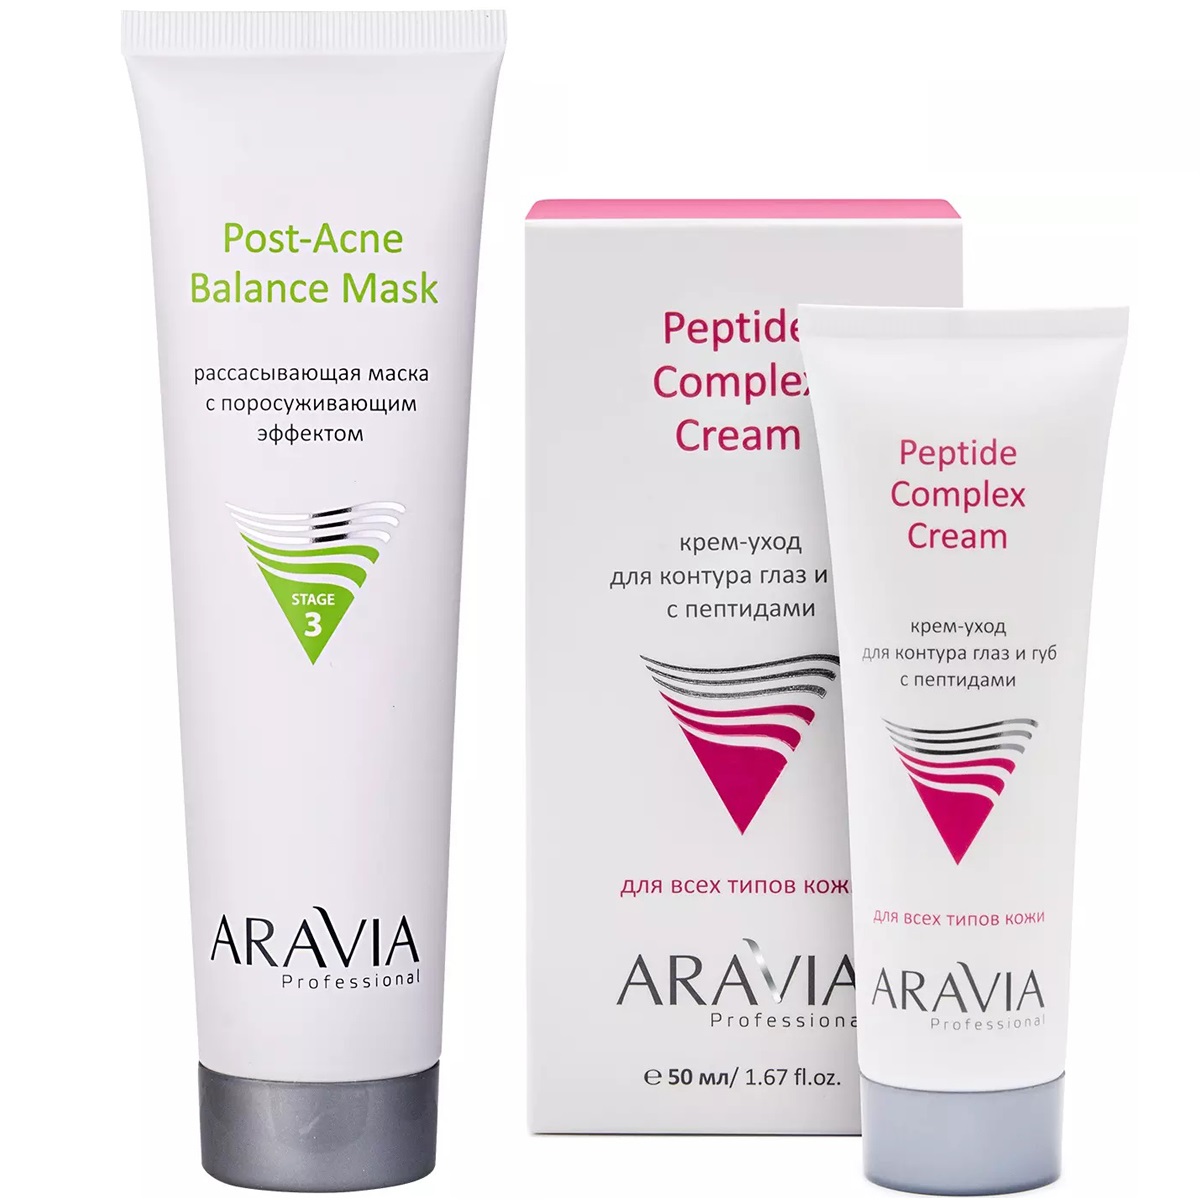 Aravia Professional Набор для ухода за кожей: крем-уход для губ и век, 50 мл + маска, 100 мл (Aravia Professional, Уход за лицом) nutri peptide крем балансирующий нутри пептид для комб и жирной кожи 50 мл